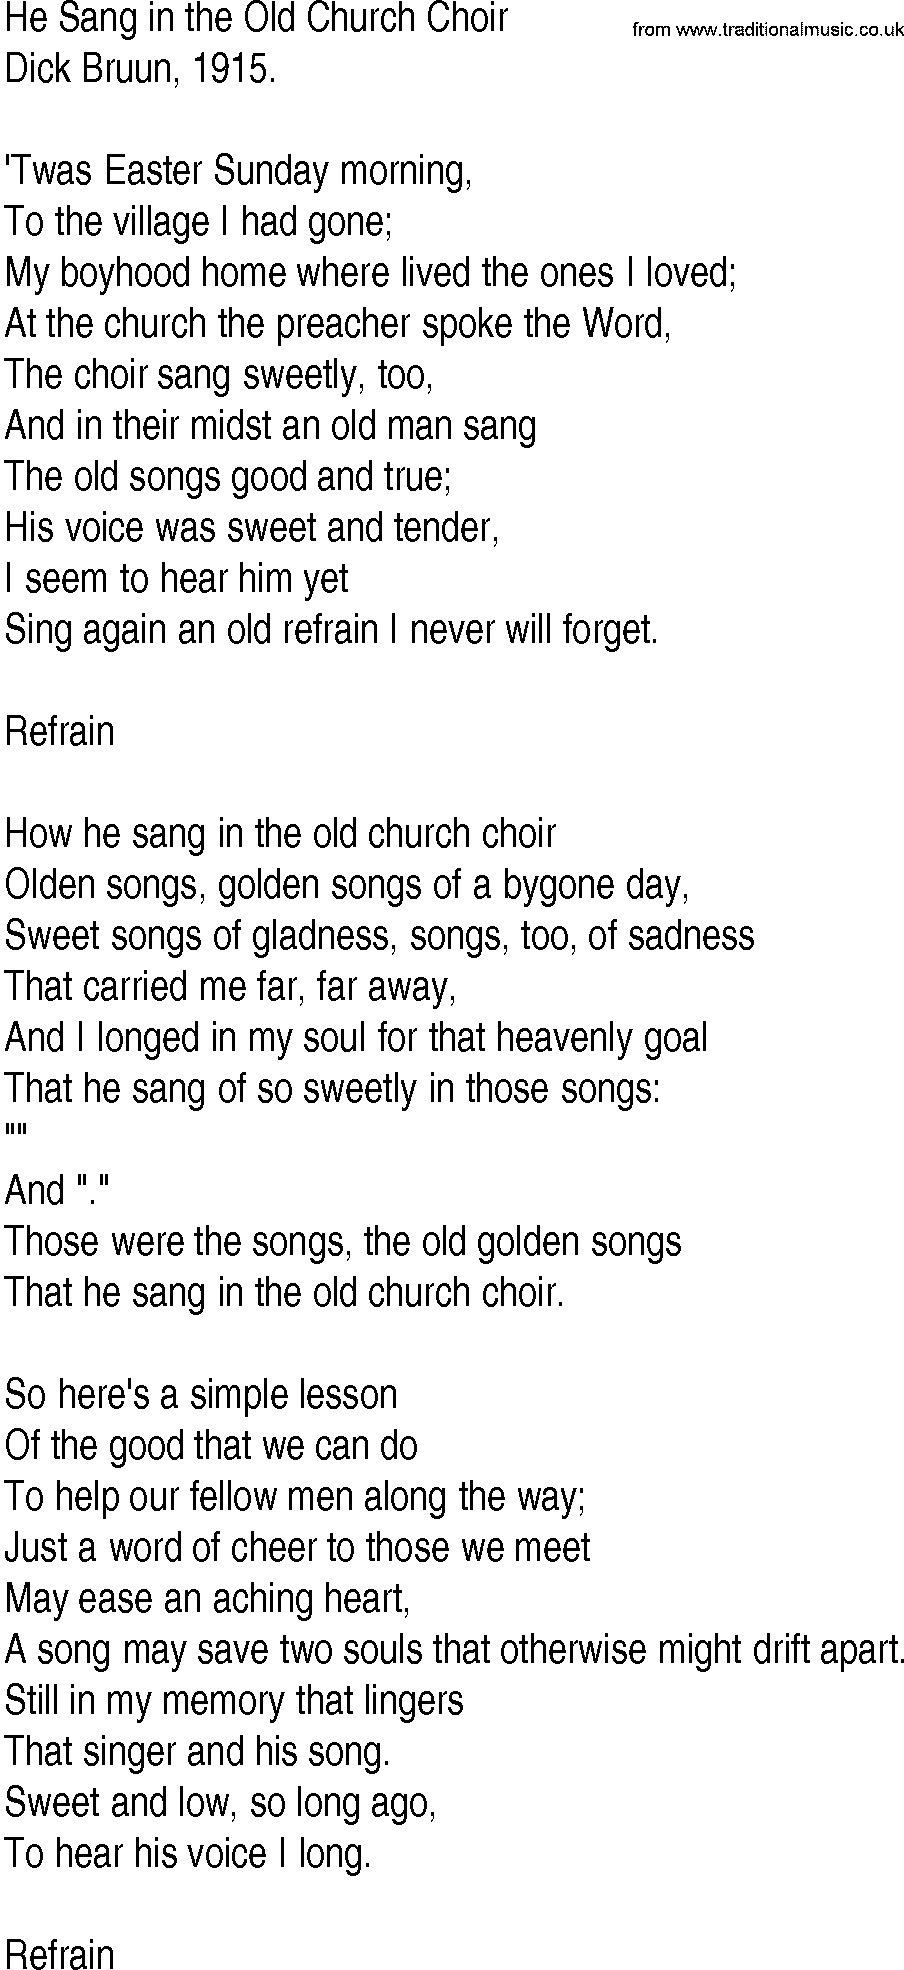 Hymn and Gospel Song: He Sang in the Old Church Choir by Dick Bruun lyrics